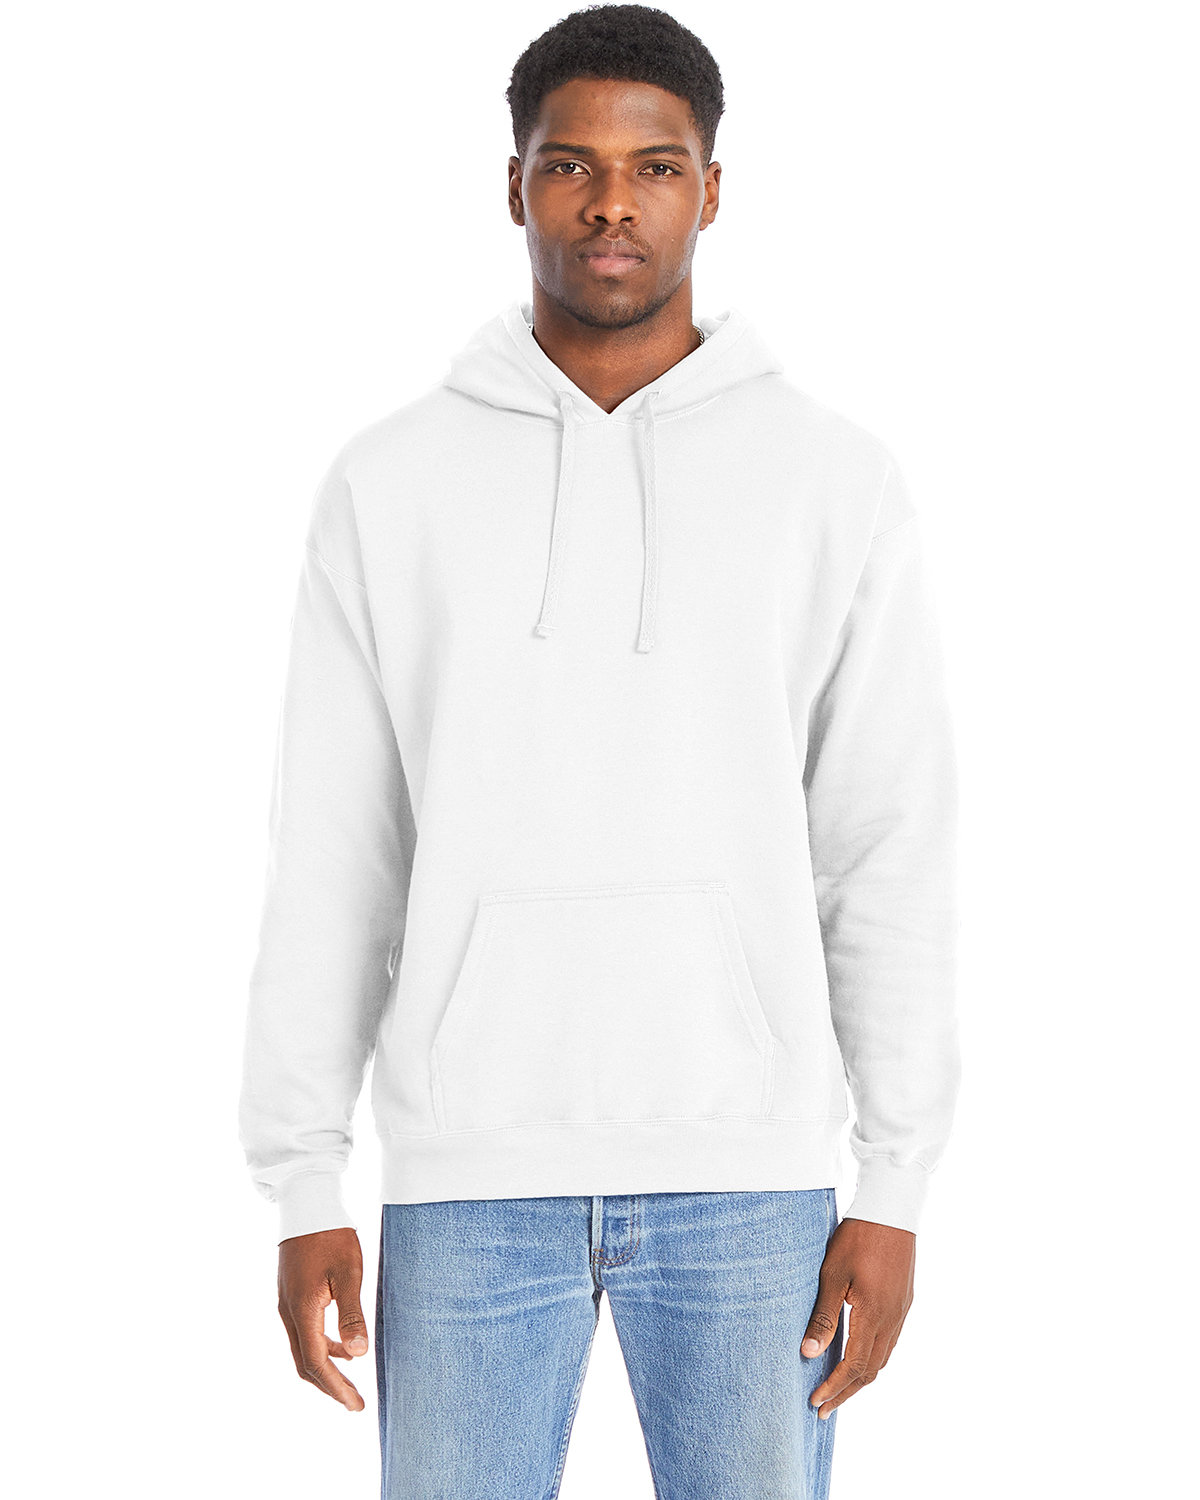 Perfect Sweats Pullover Hooded Sweatshirt-Hanes